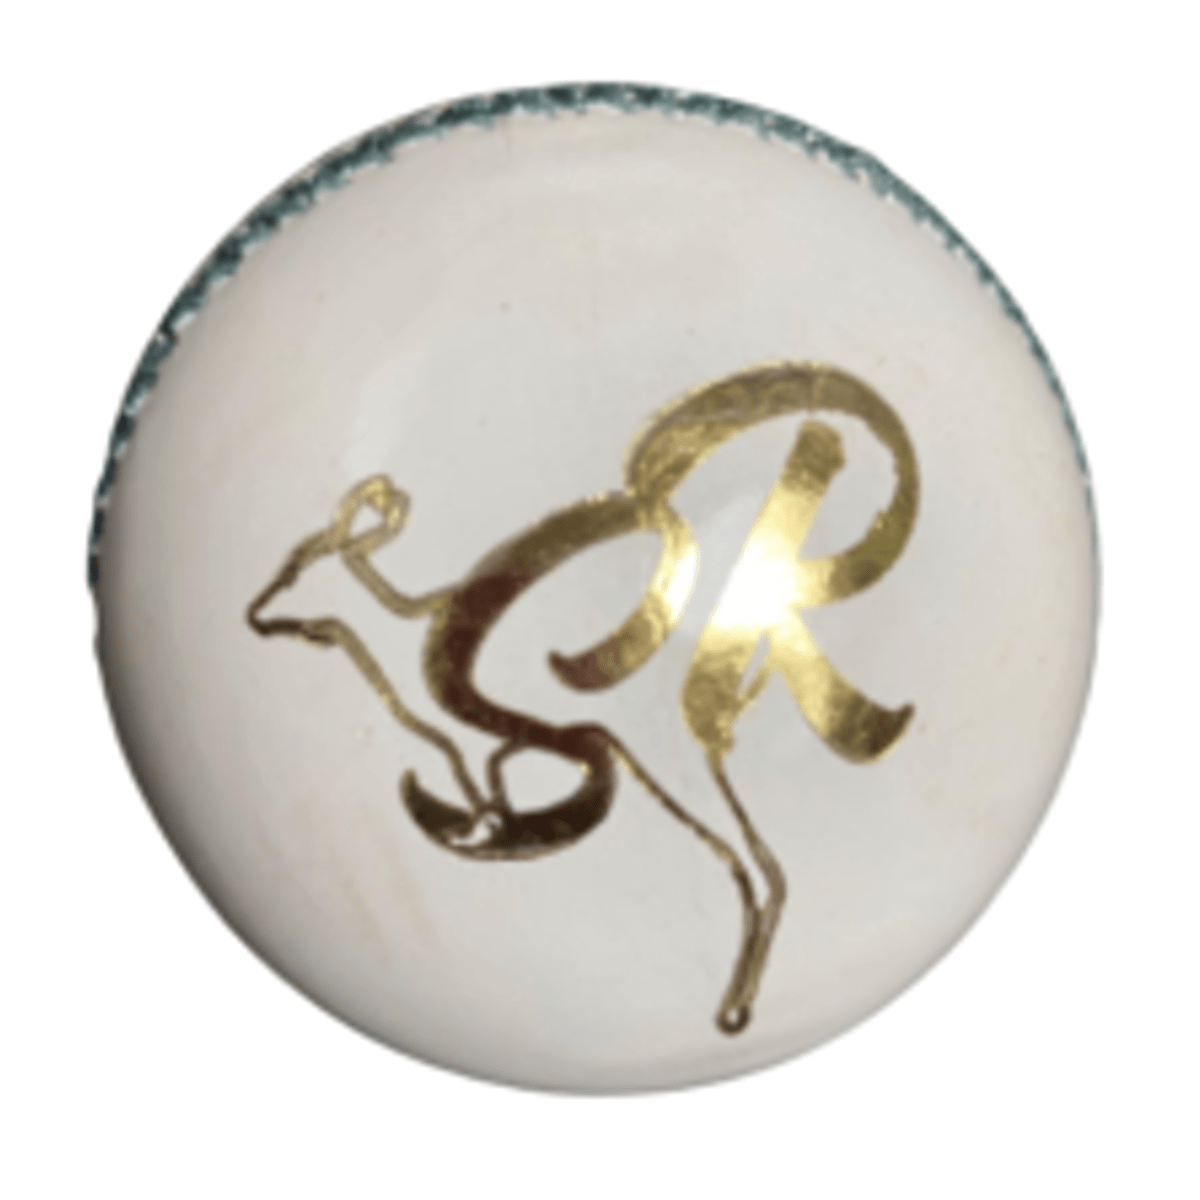 SR Test Leather Cricket Ball (4 Piece)